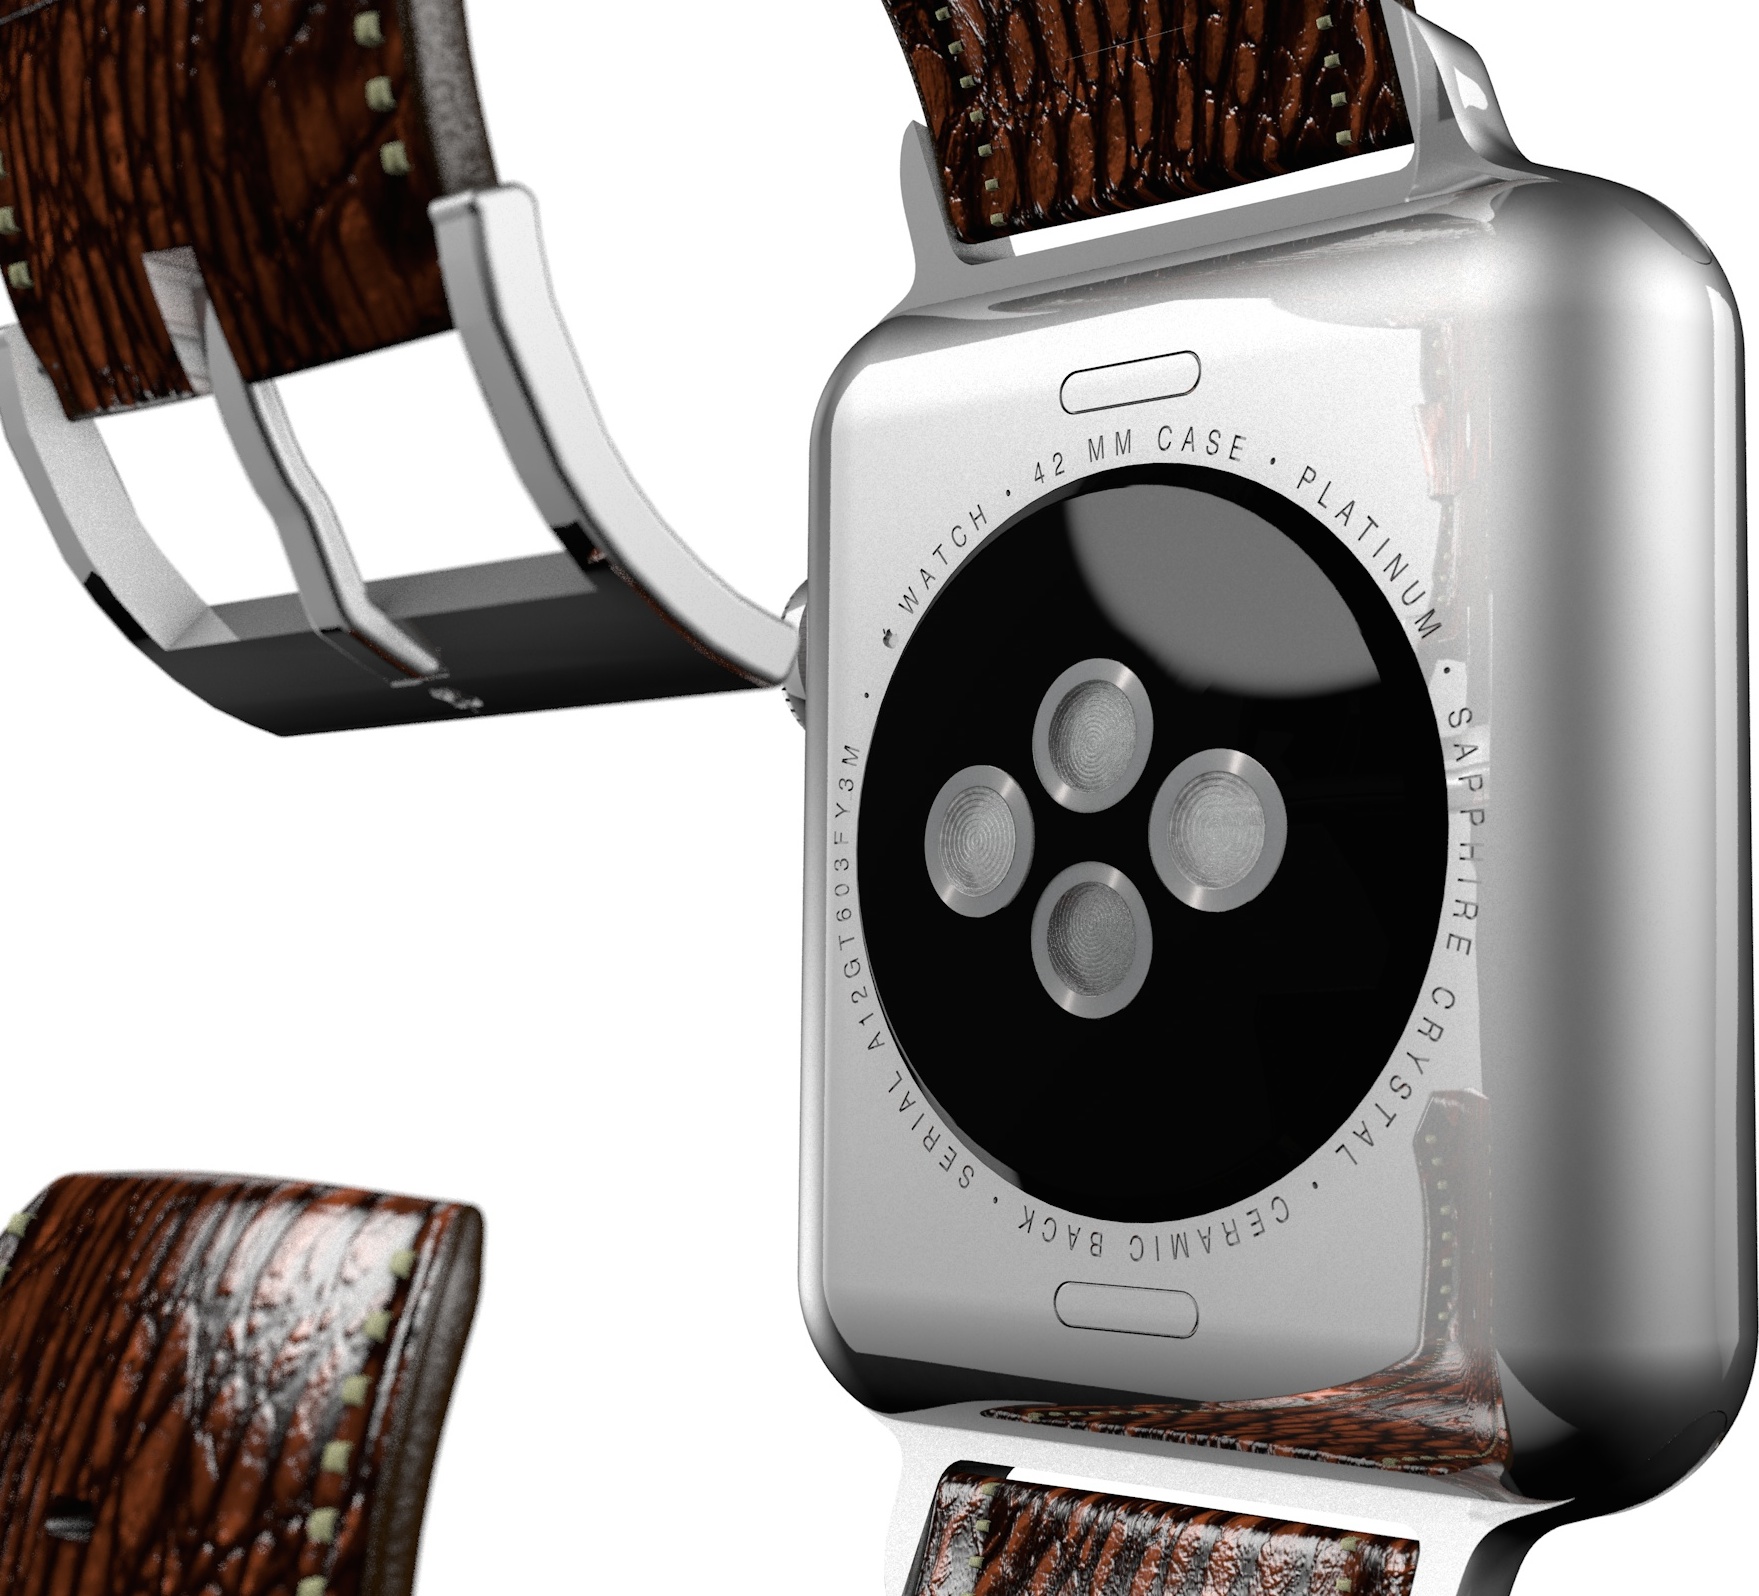 Apple Watch 2 concept